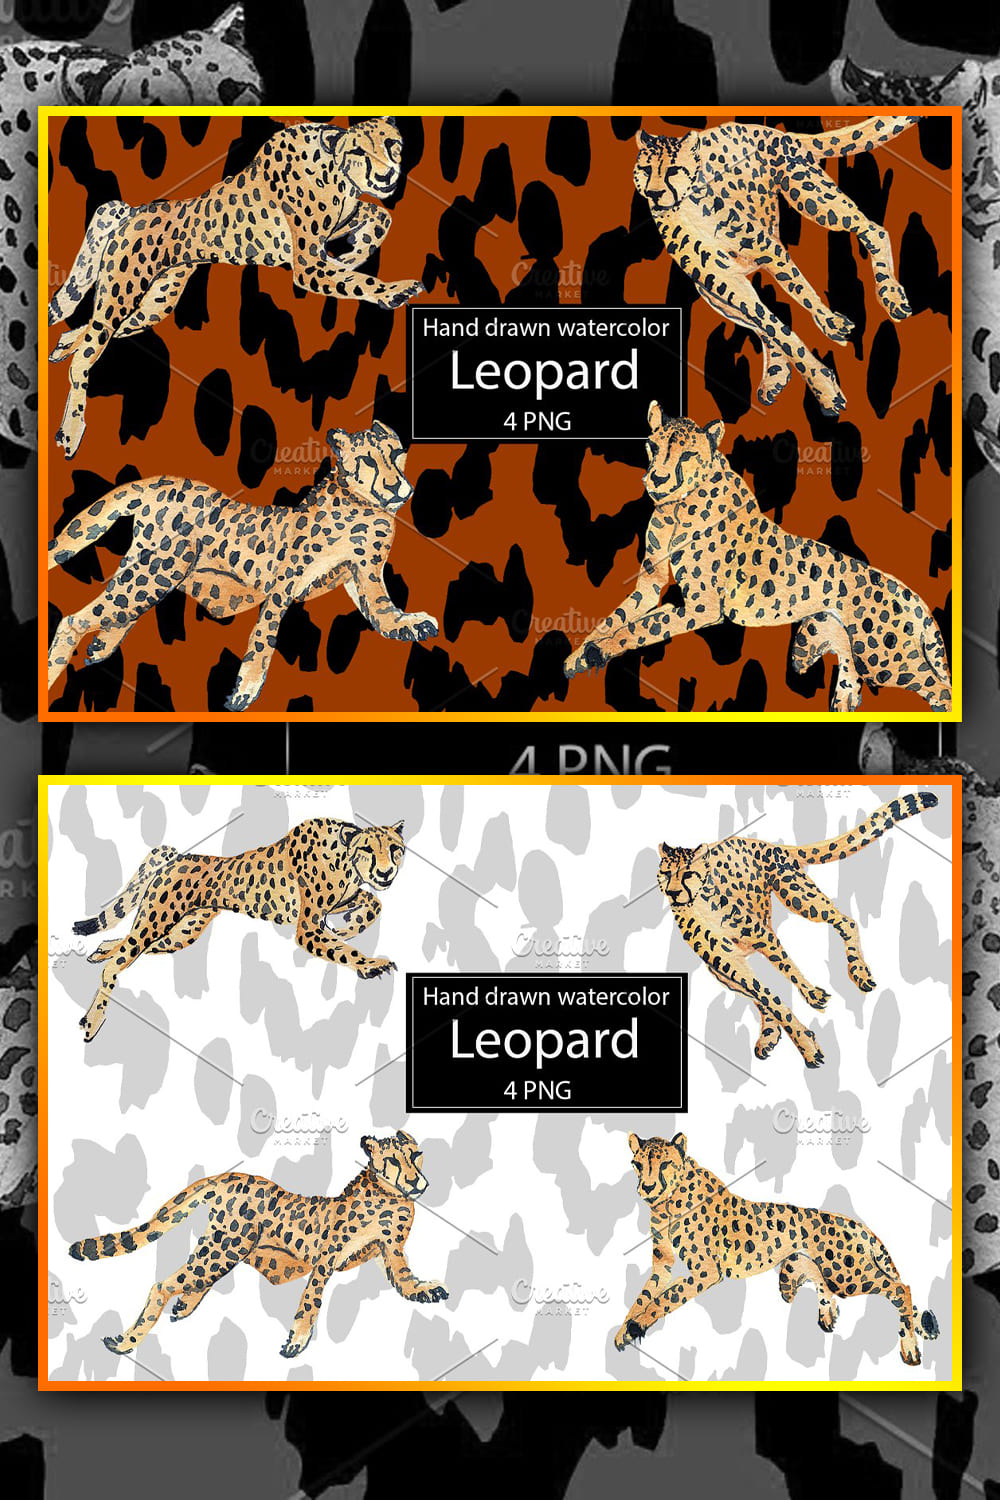 Watercolor Leopard - Pinterest.